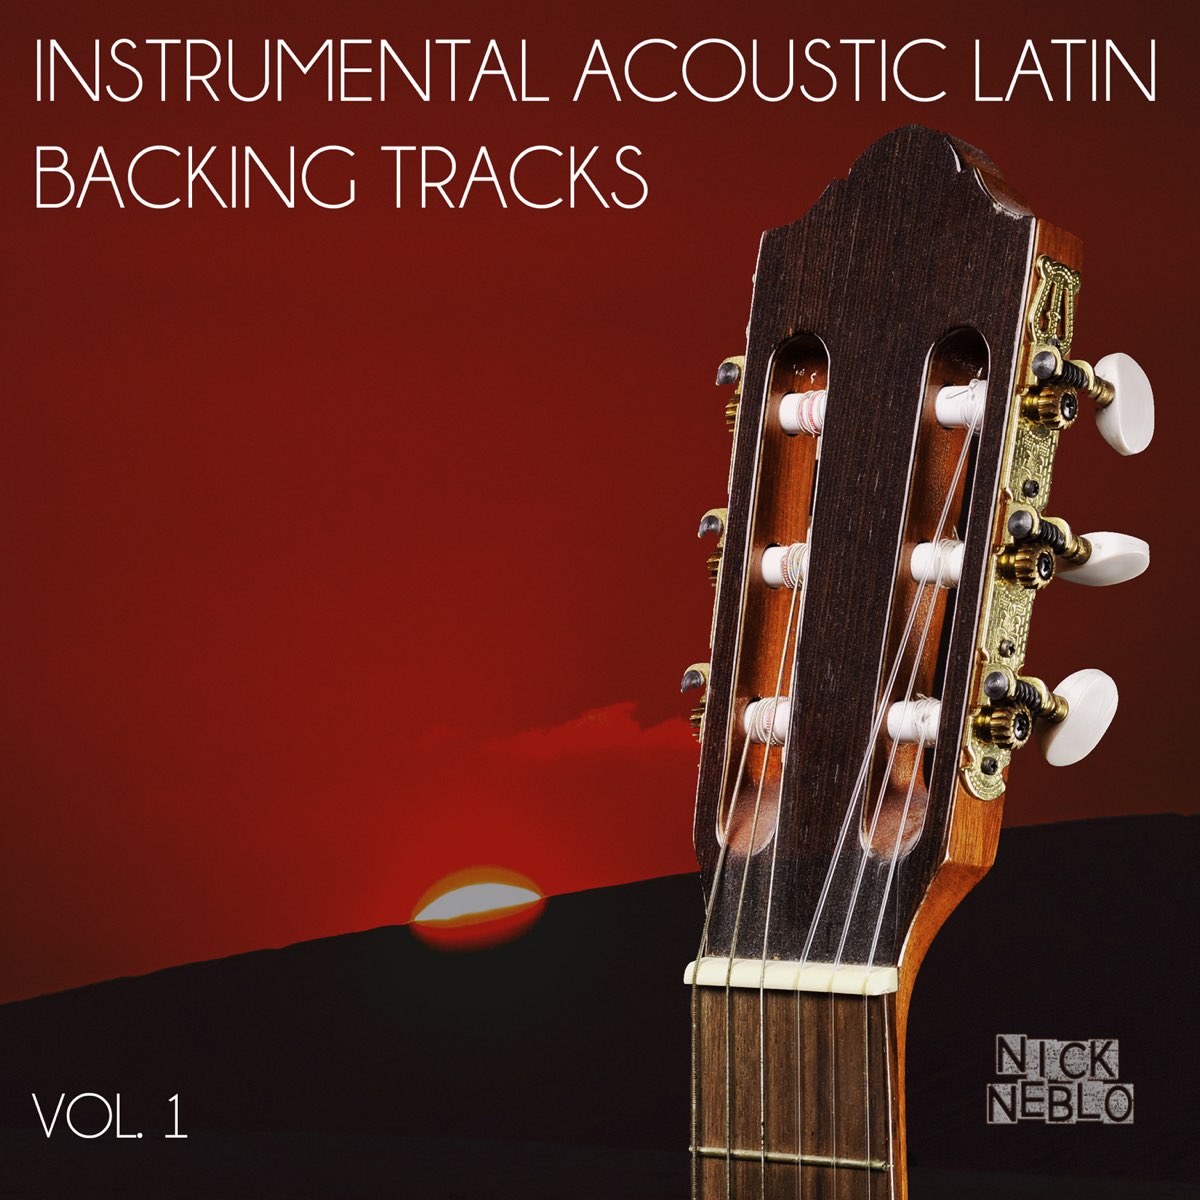 Span back. Гитара испанская обложка. Bossa Nova Guitar Classics. Acoustic Spanish Rumba Backing. Backing track am.